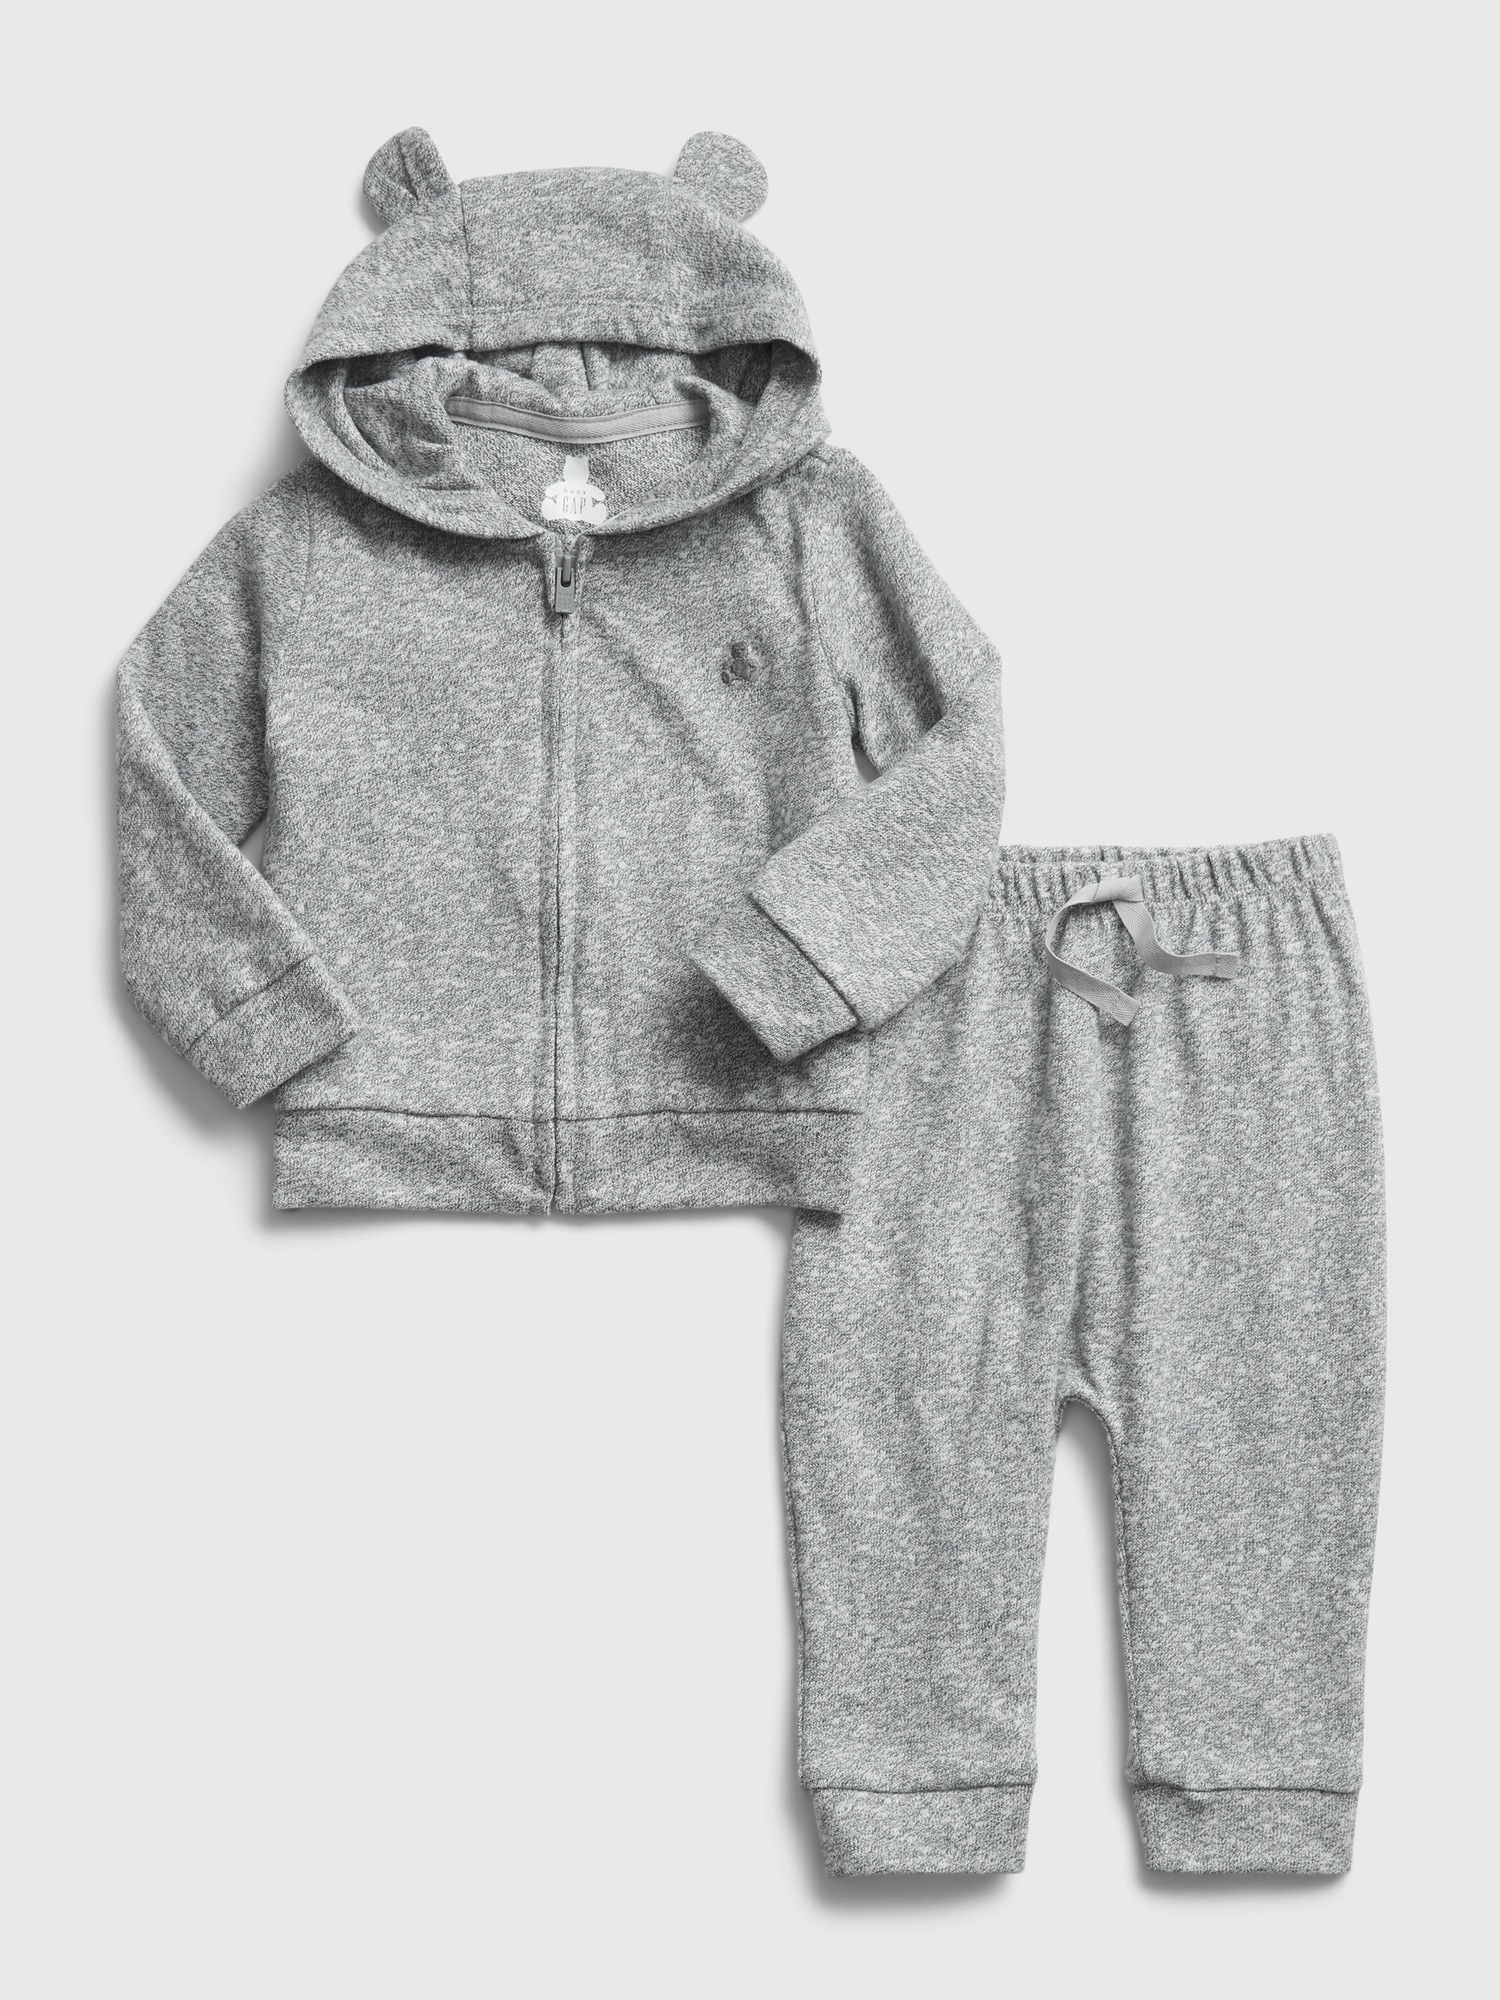 Gap Baby Marled Hoodie Outfit Set gray. 1